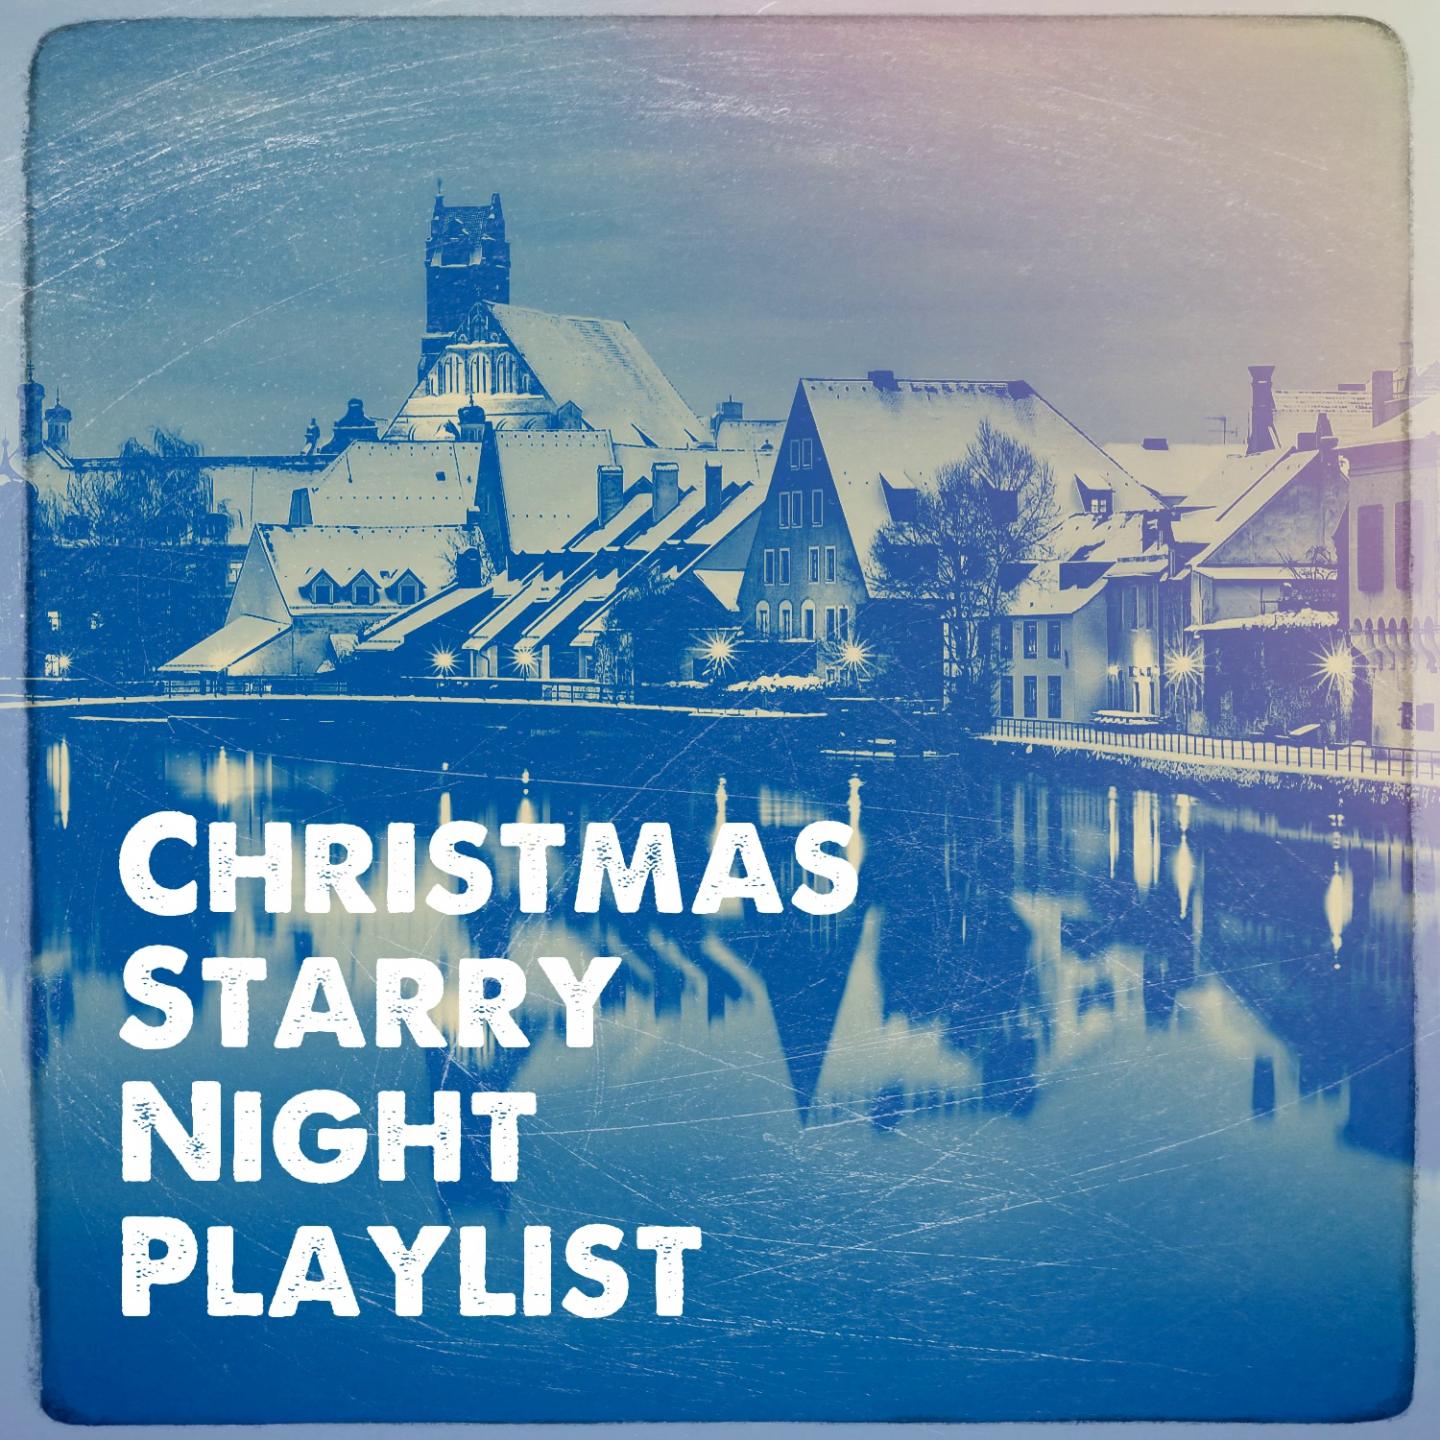 Christmas starry night playlist